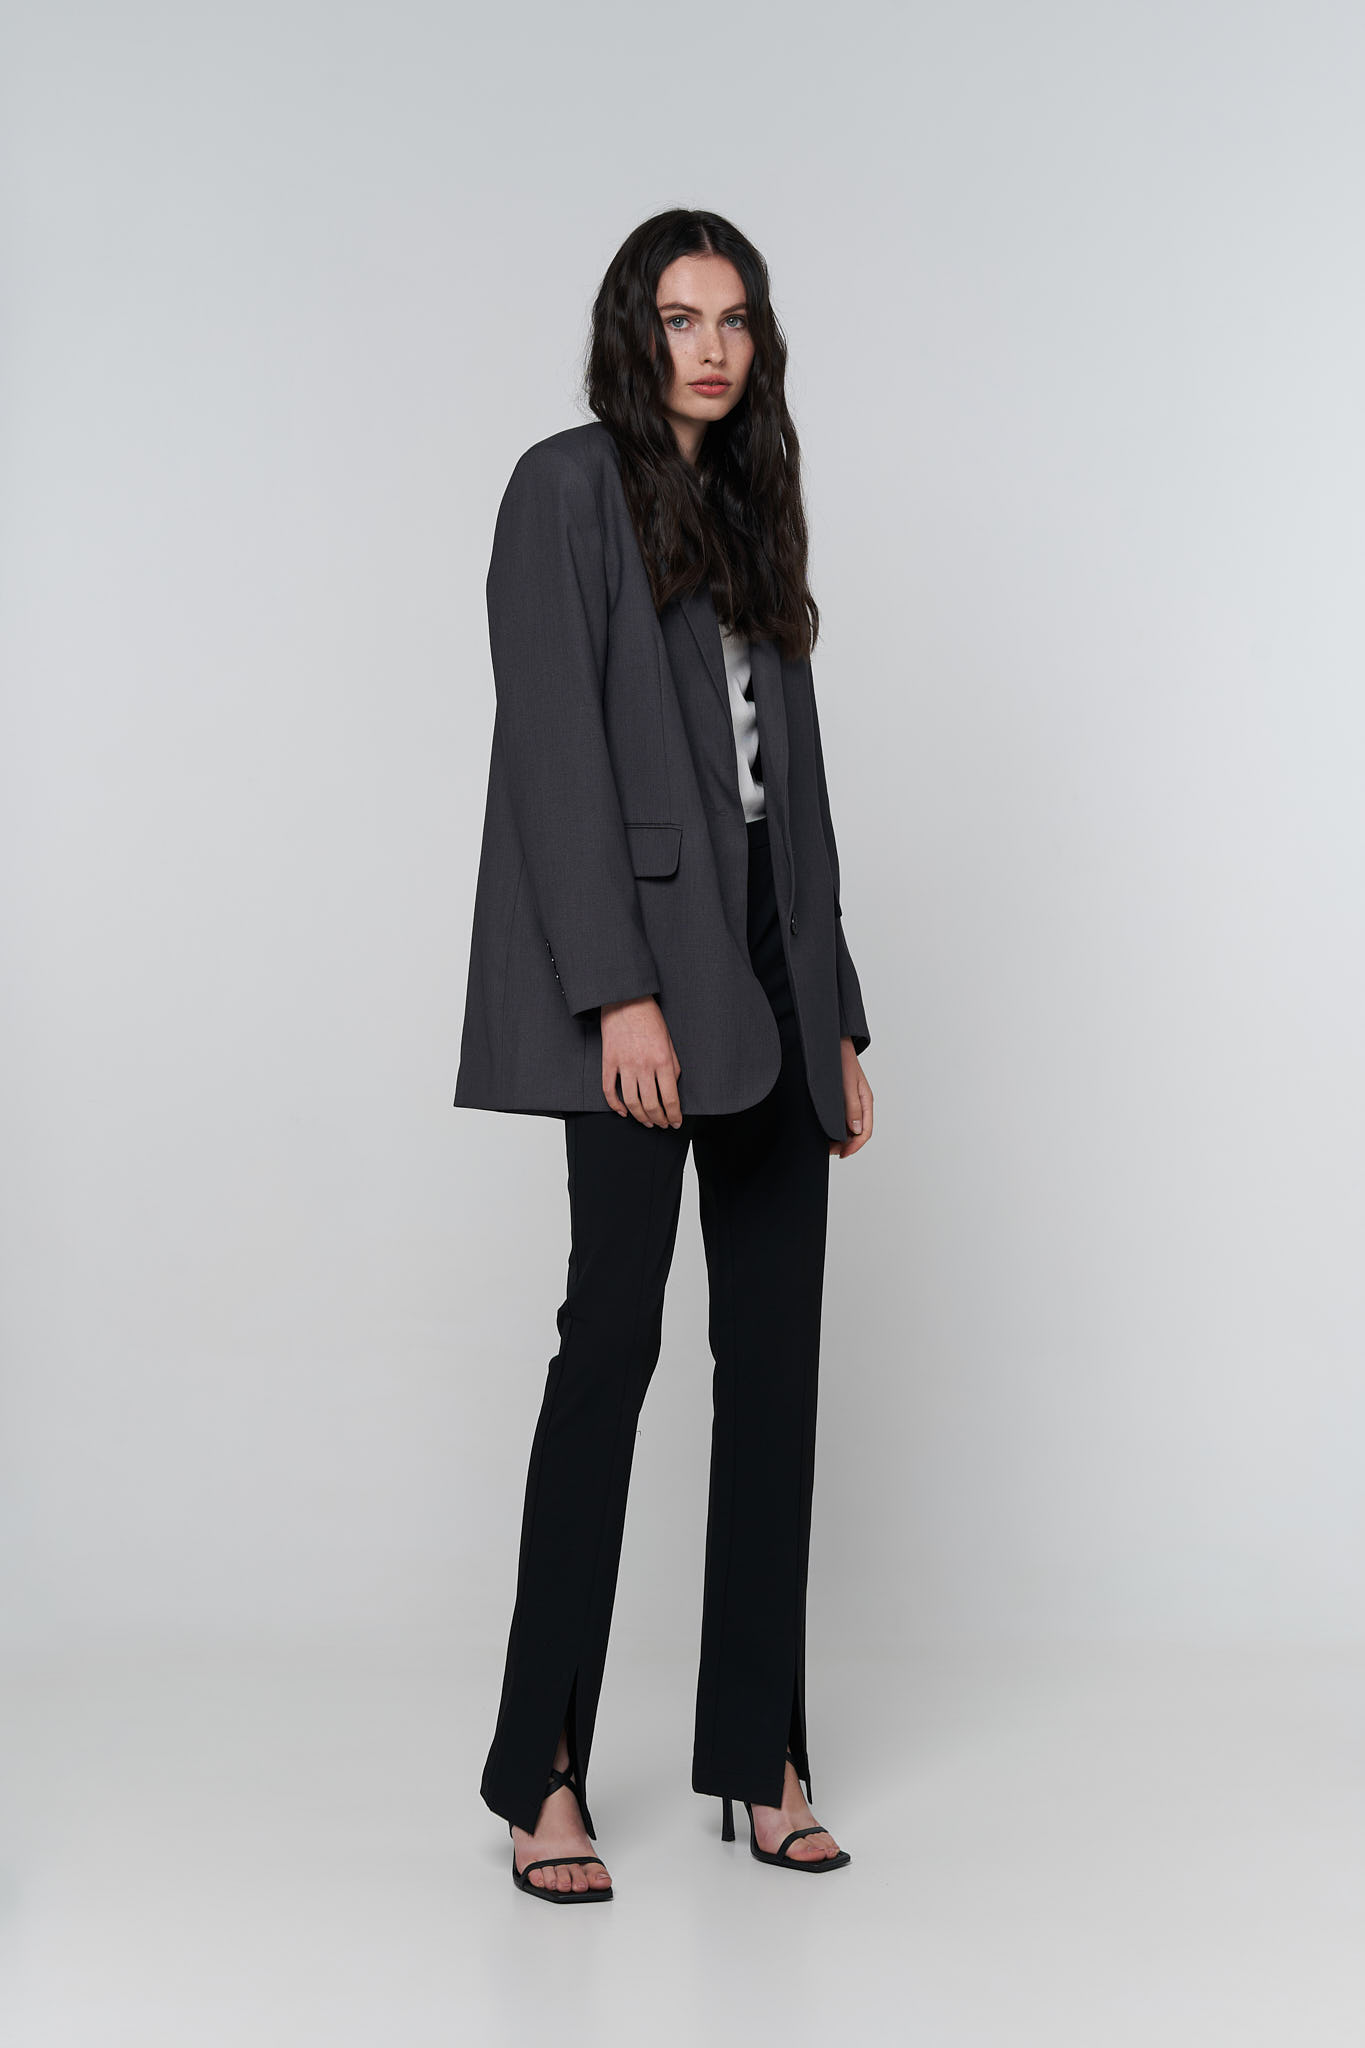 jacket 3.0 in gray color